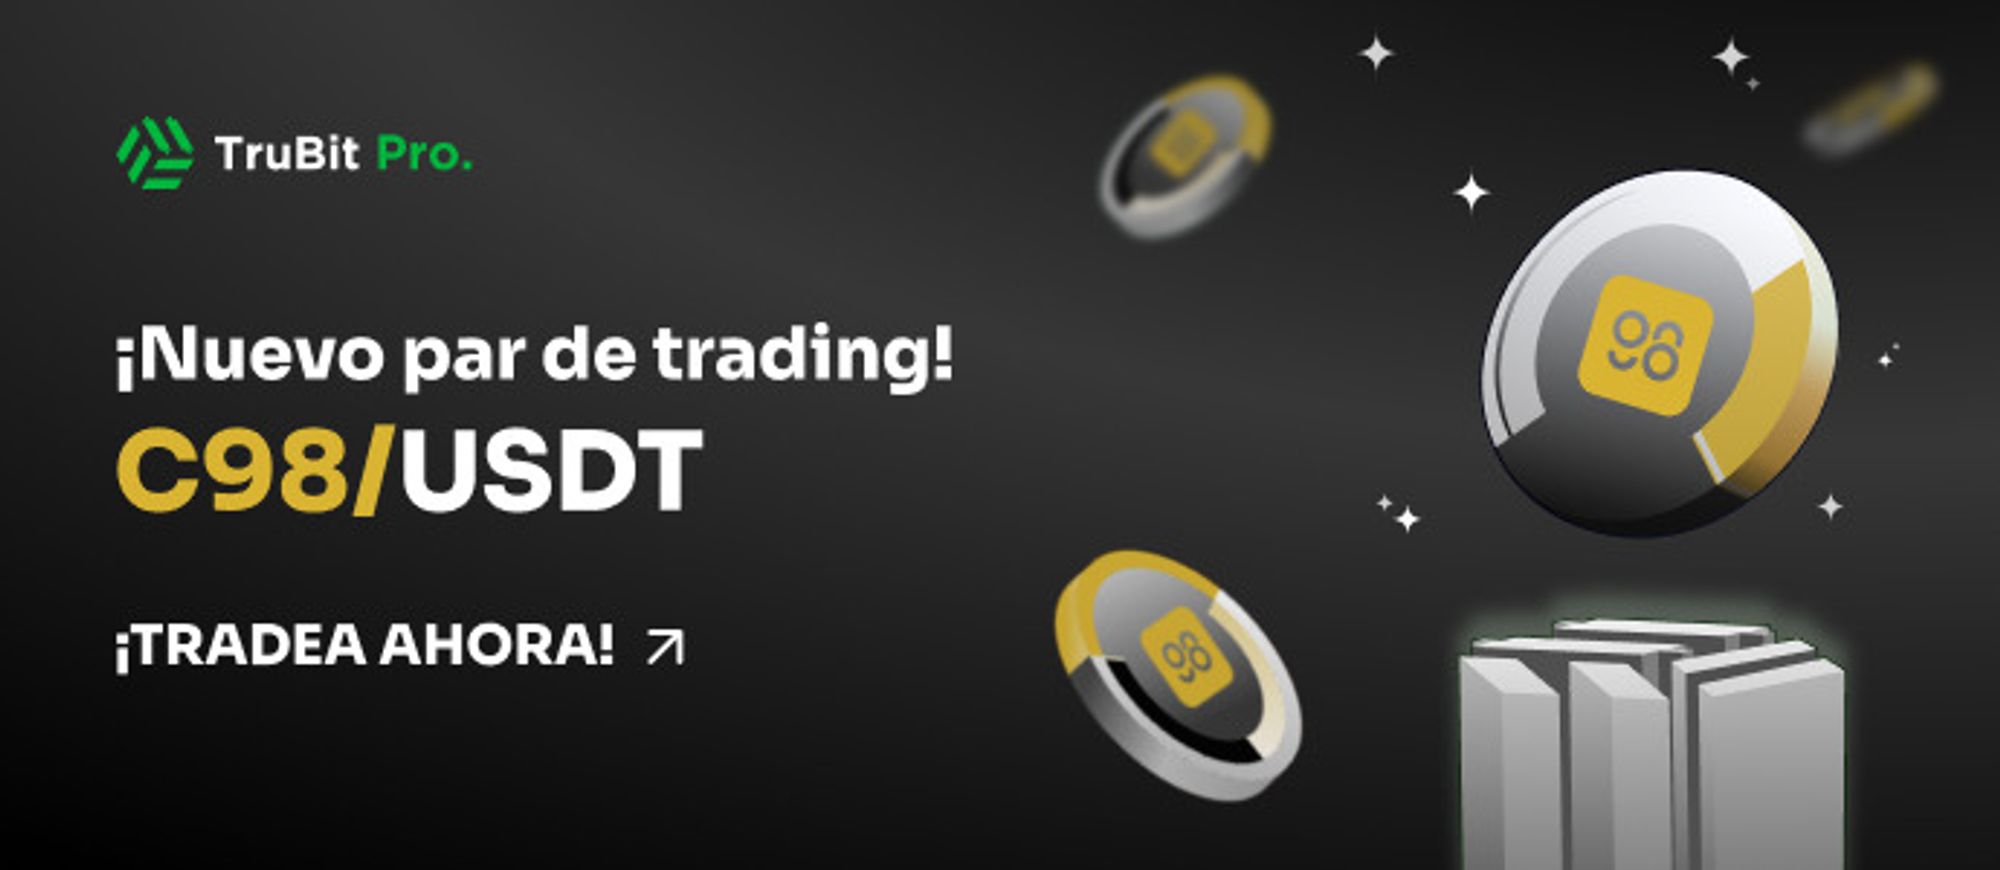 https://www.trubit.com/pro/crypto-spot-trading/C98/USDT